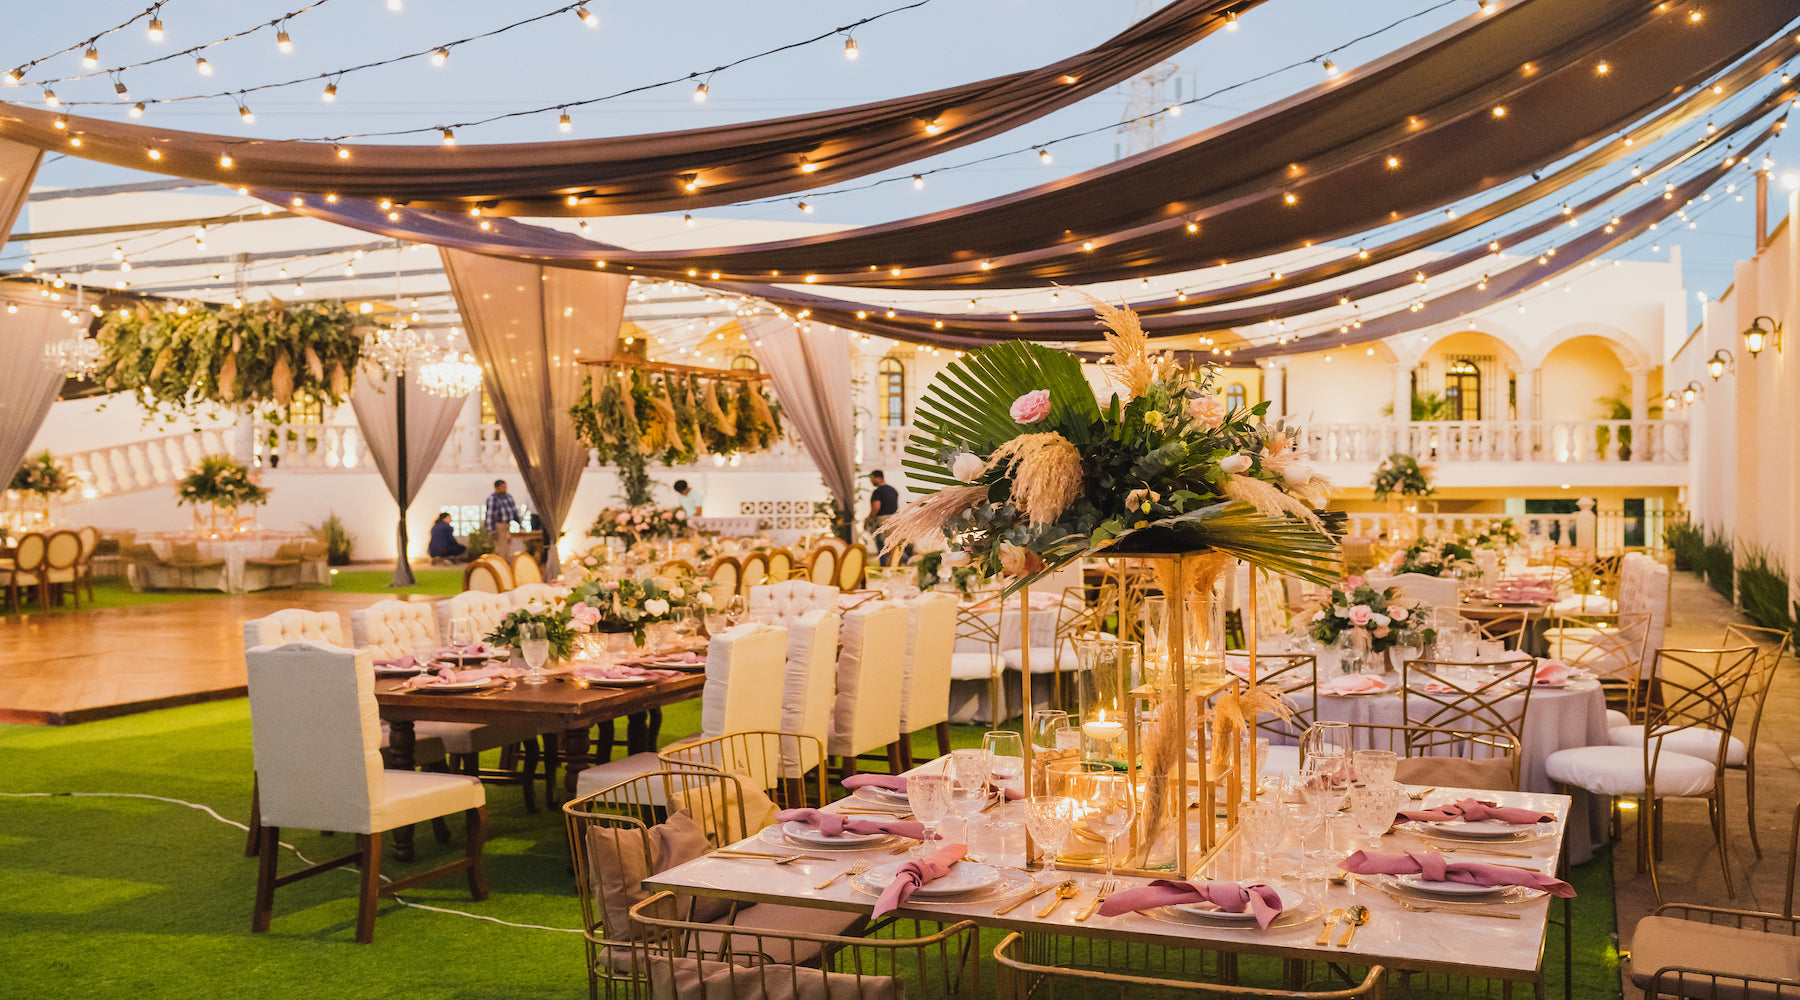 Event lighting shown illuminating a beautiful outdoor wedding event reception area